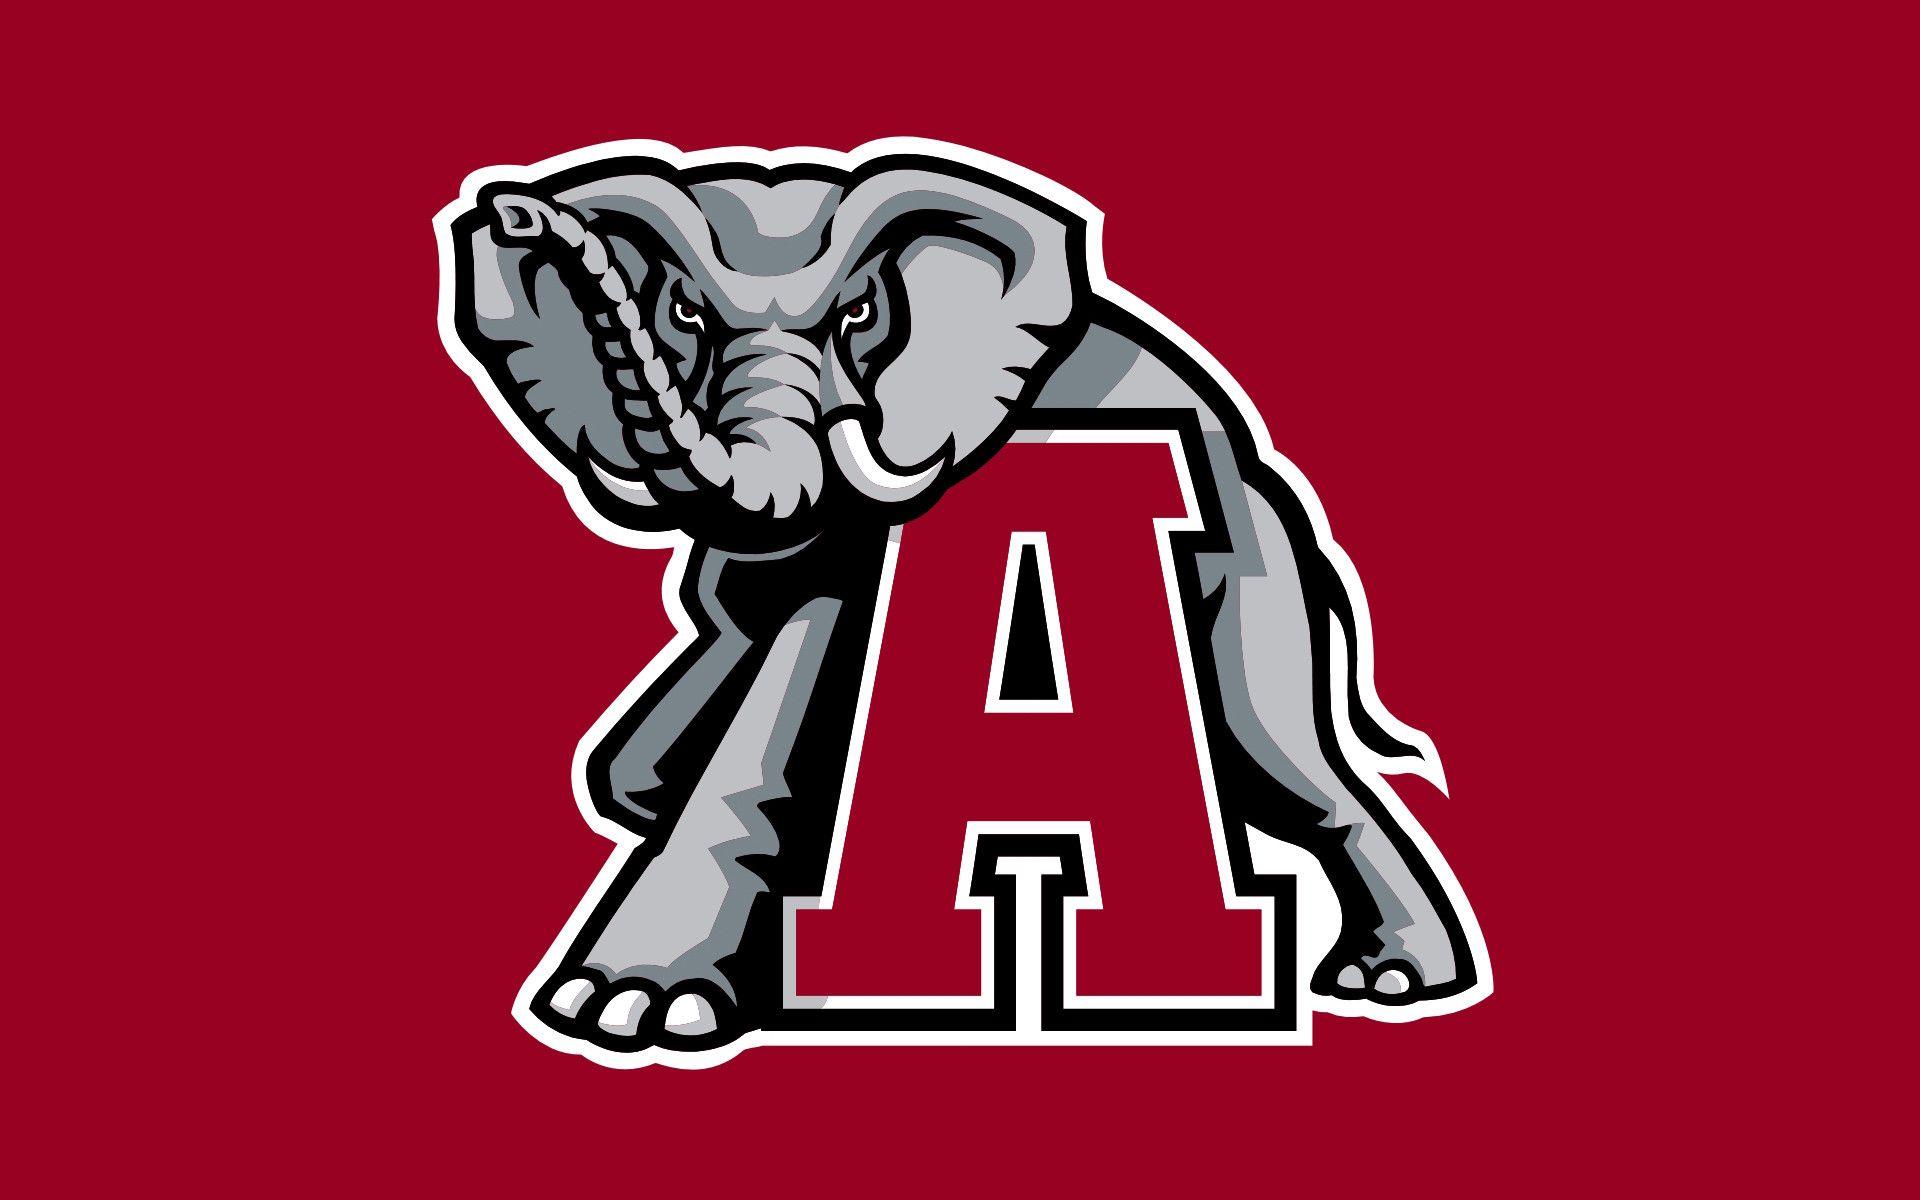 Elephant Alabama Football Logo Wallpaper in High Quality